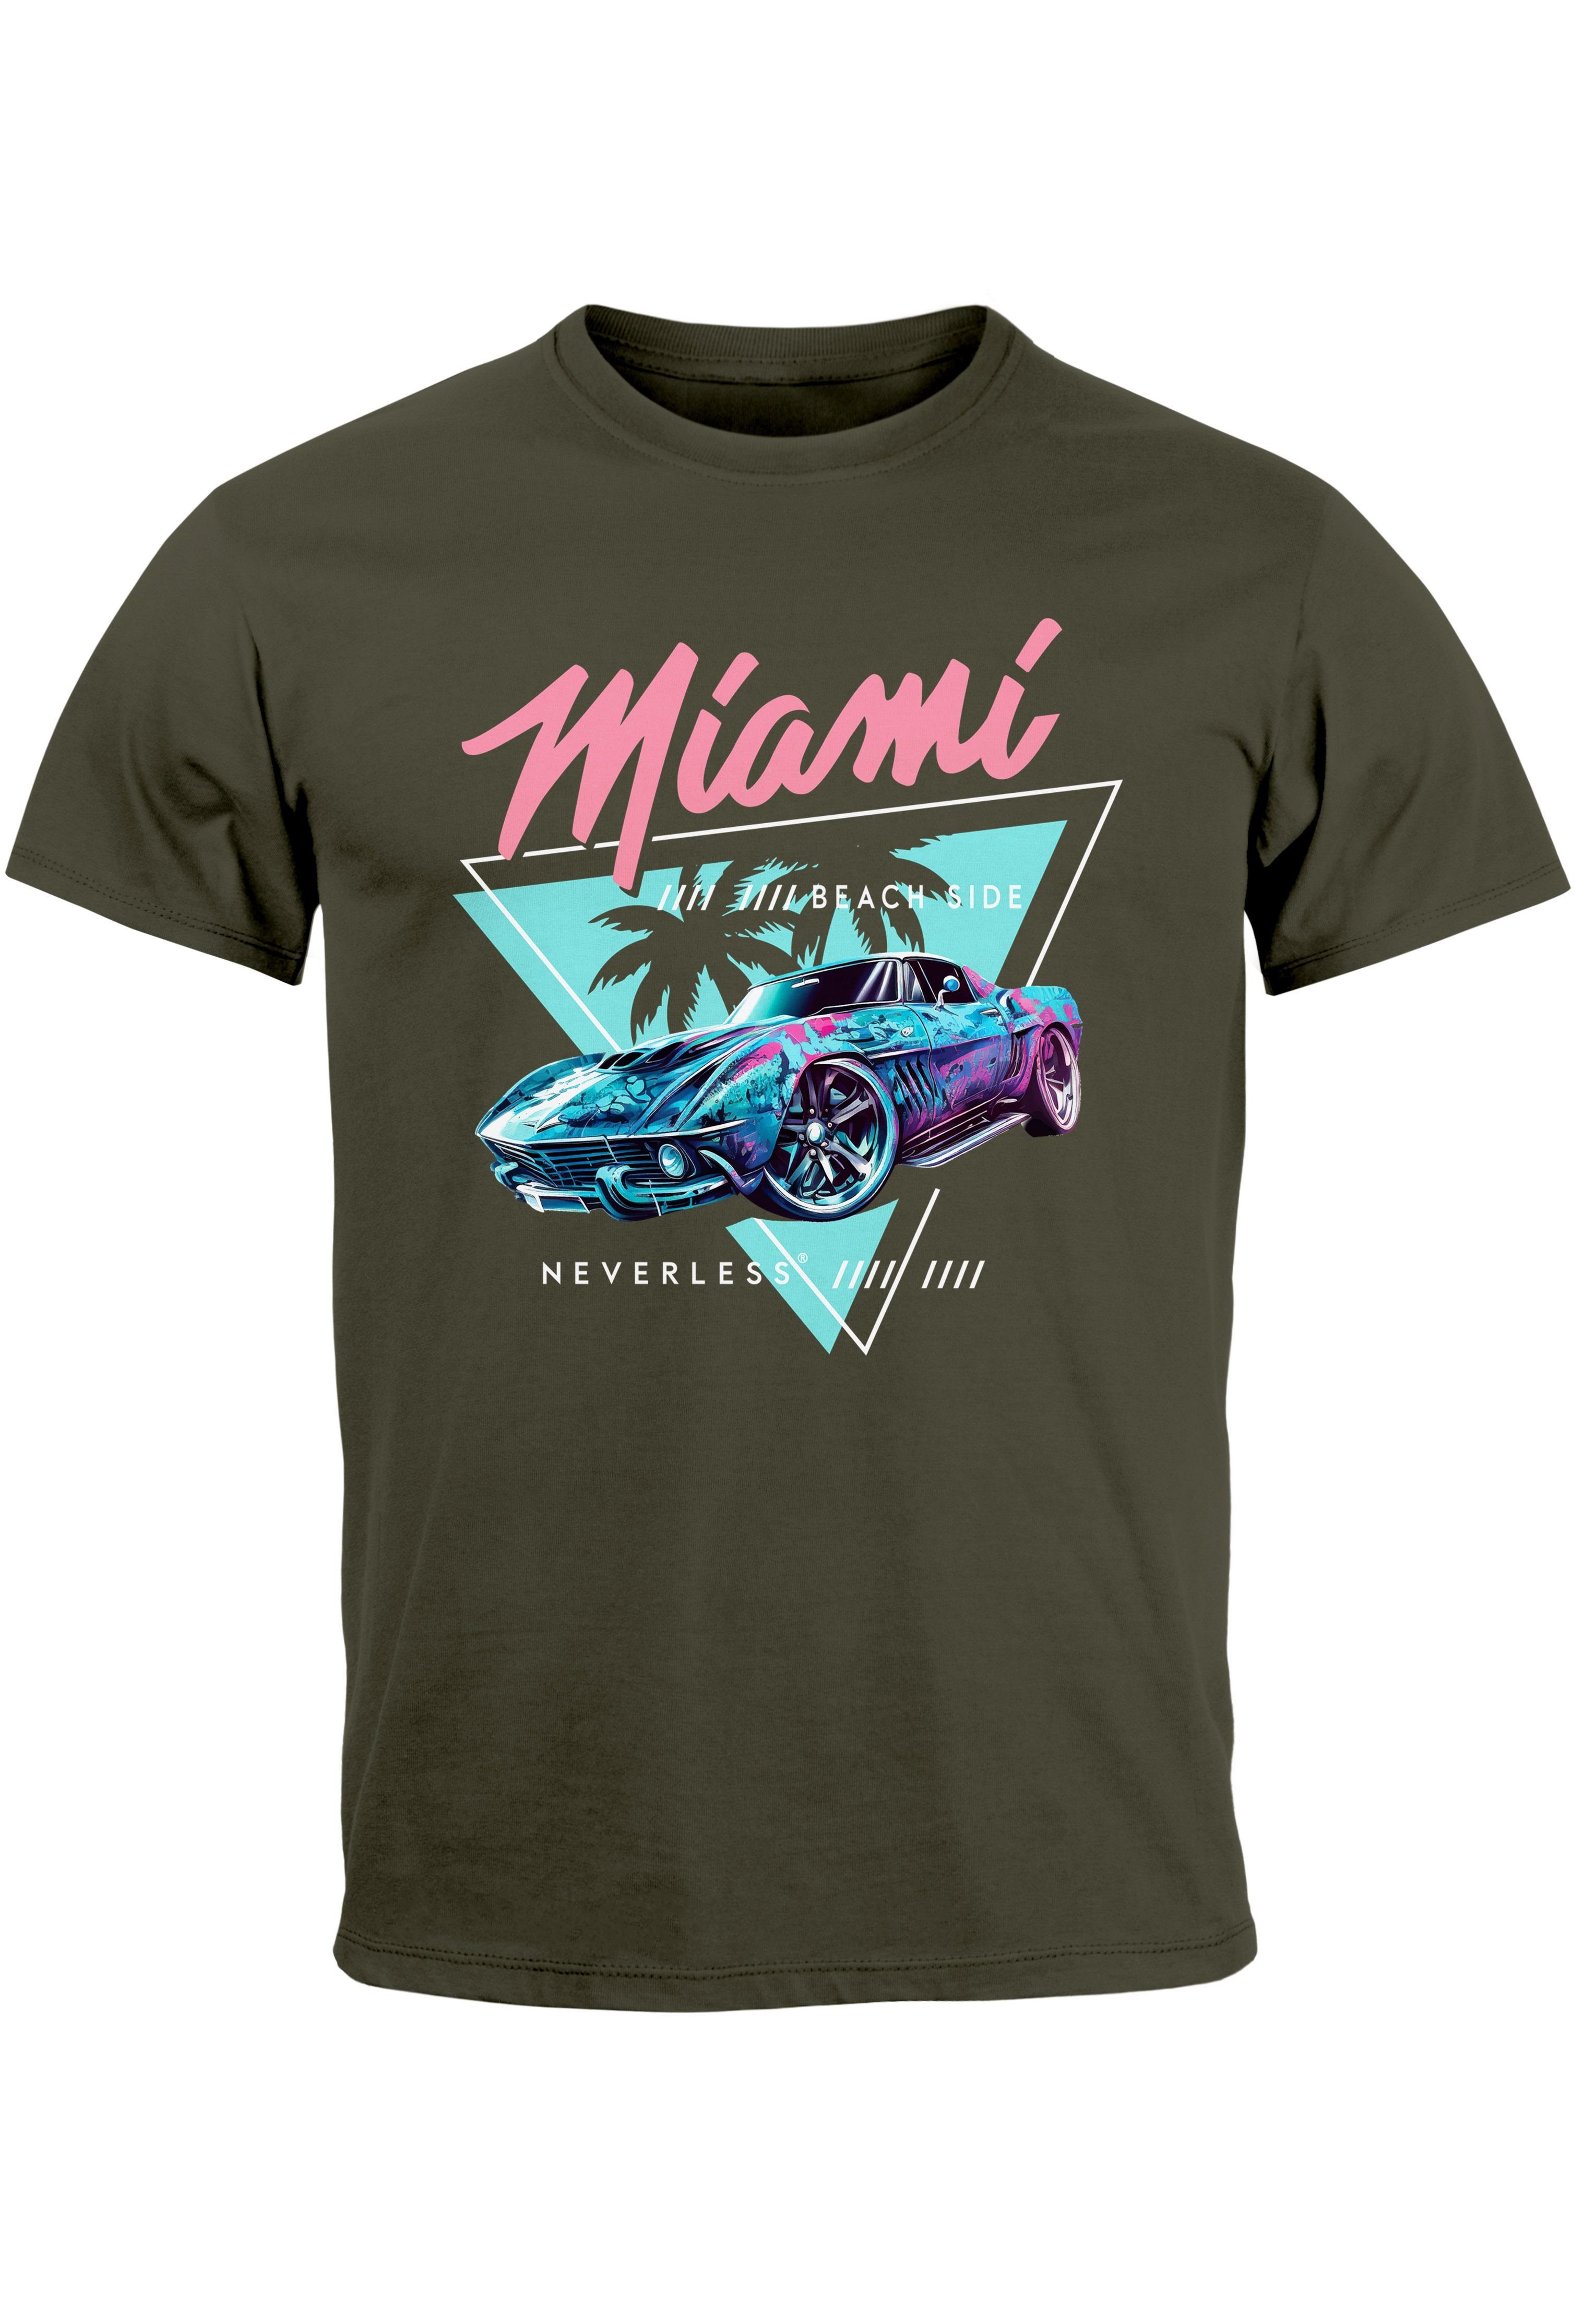 mit Print-Shirt USA Motiv Print Neverless Retro army Miami Herren Bedruckt T-Shirt Automobil Surfing Beach